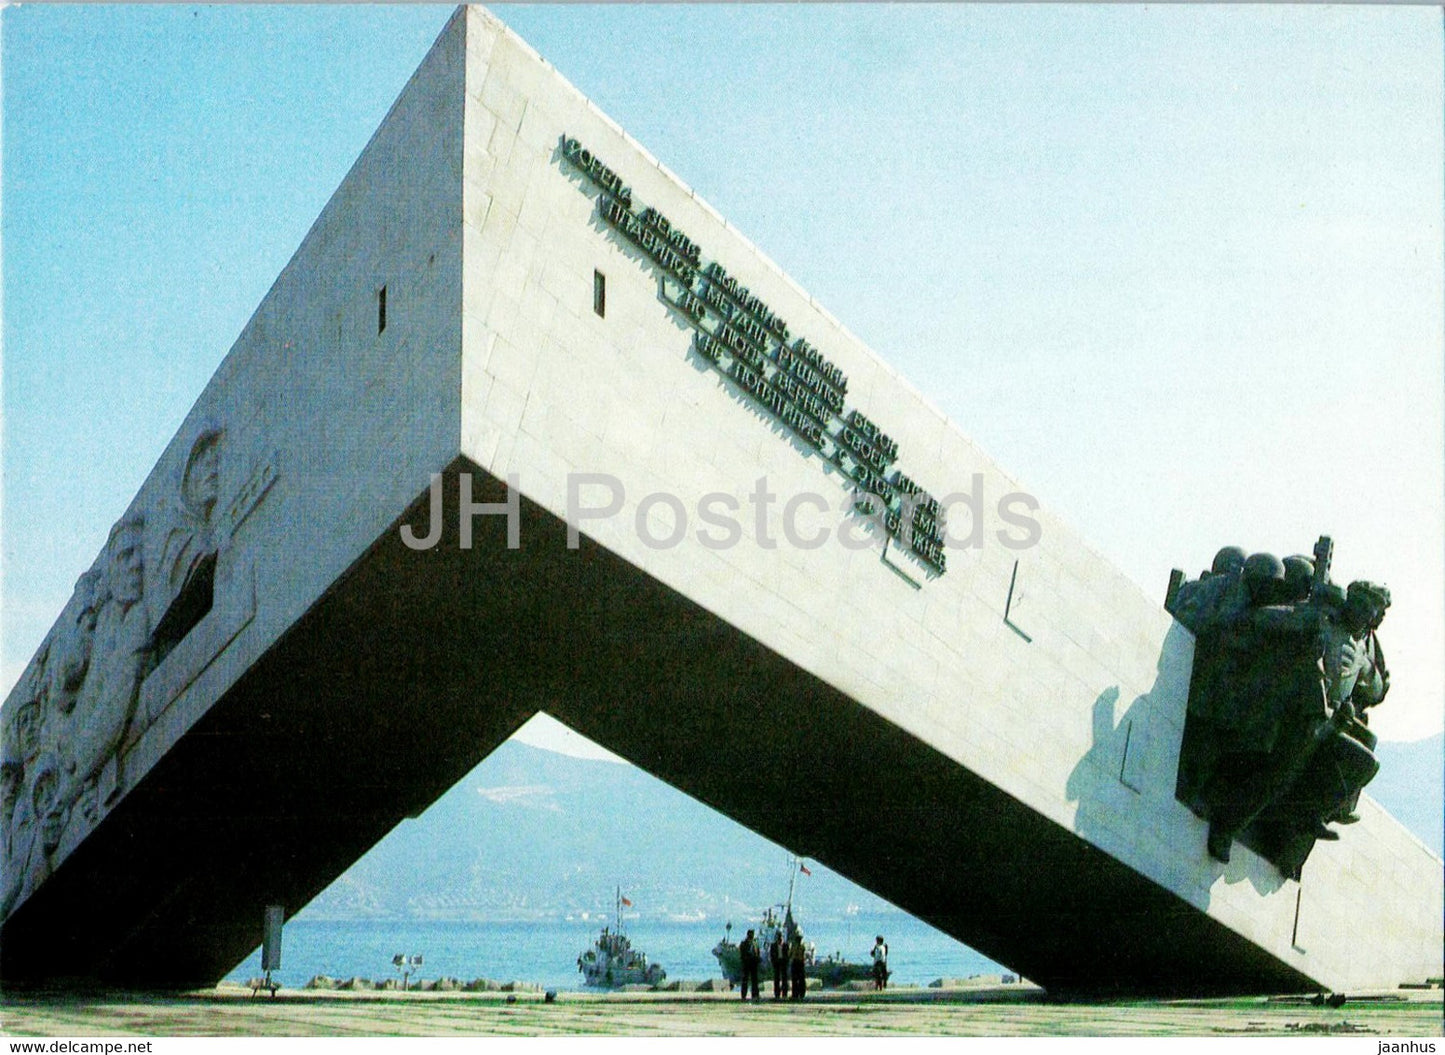 memorial Malaya Zemlya - marines - Novorossiysk - 1 - 1986 - Russia USSR - unused - JH Postcards